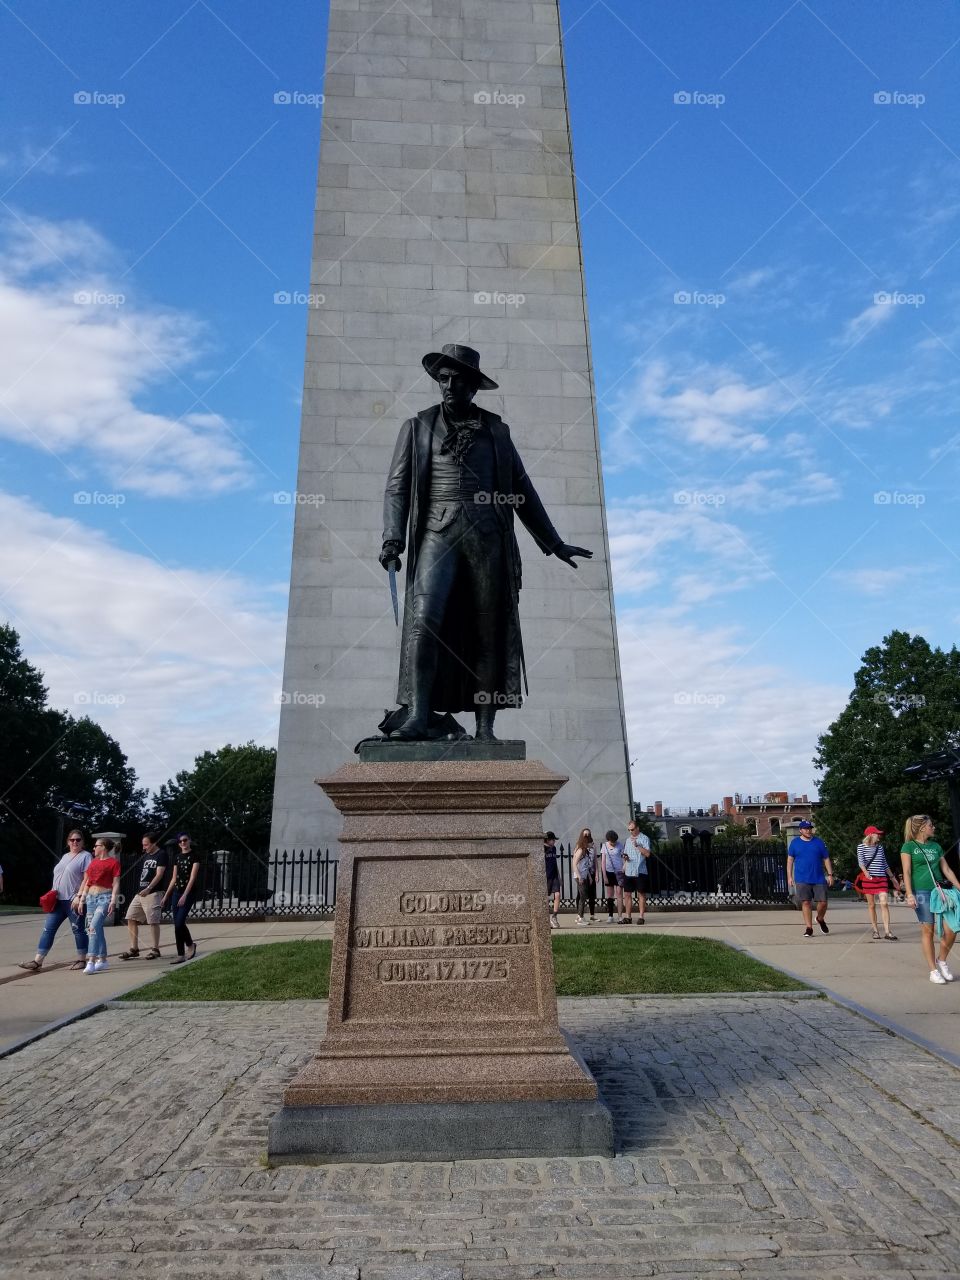 Colonel William Prescott, Bunker Hill Monument Boston Massachusetts